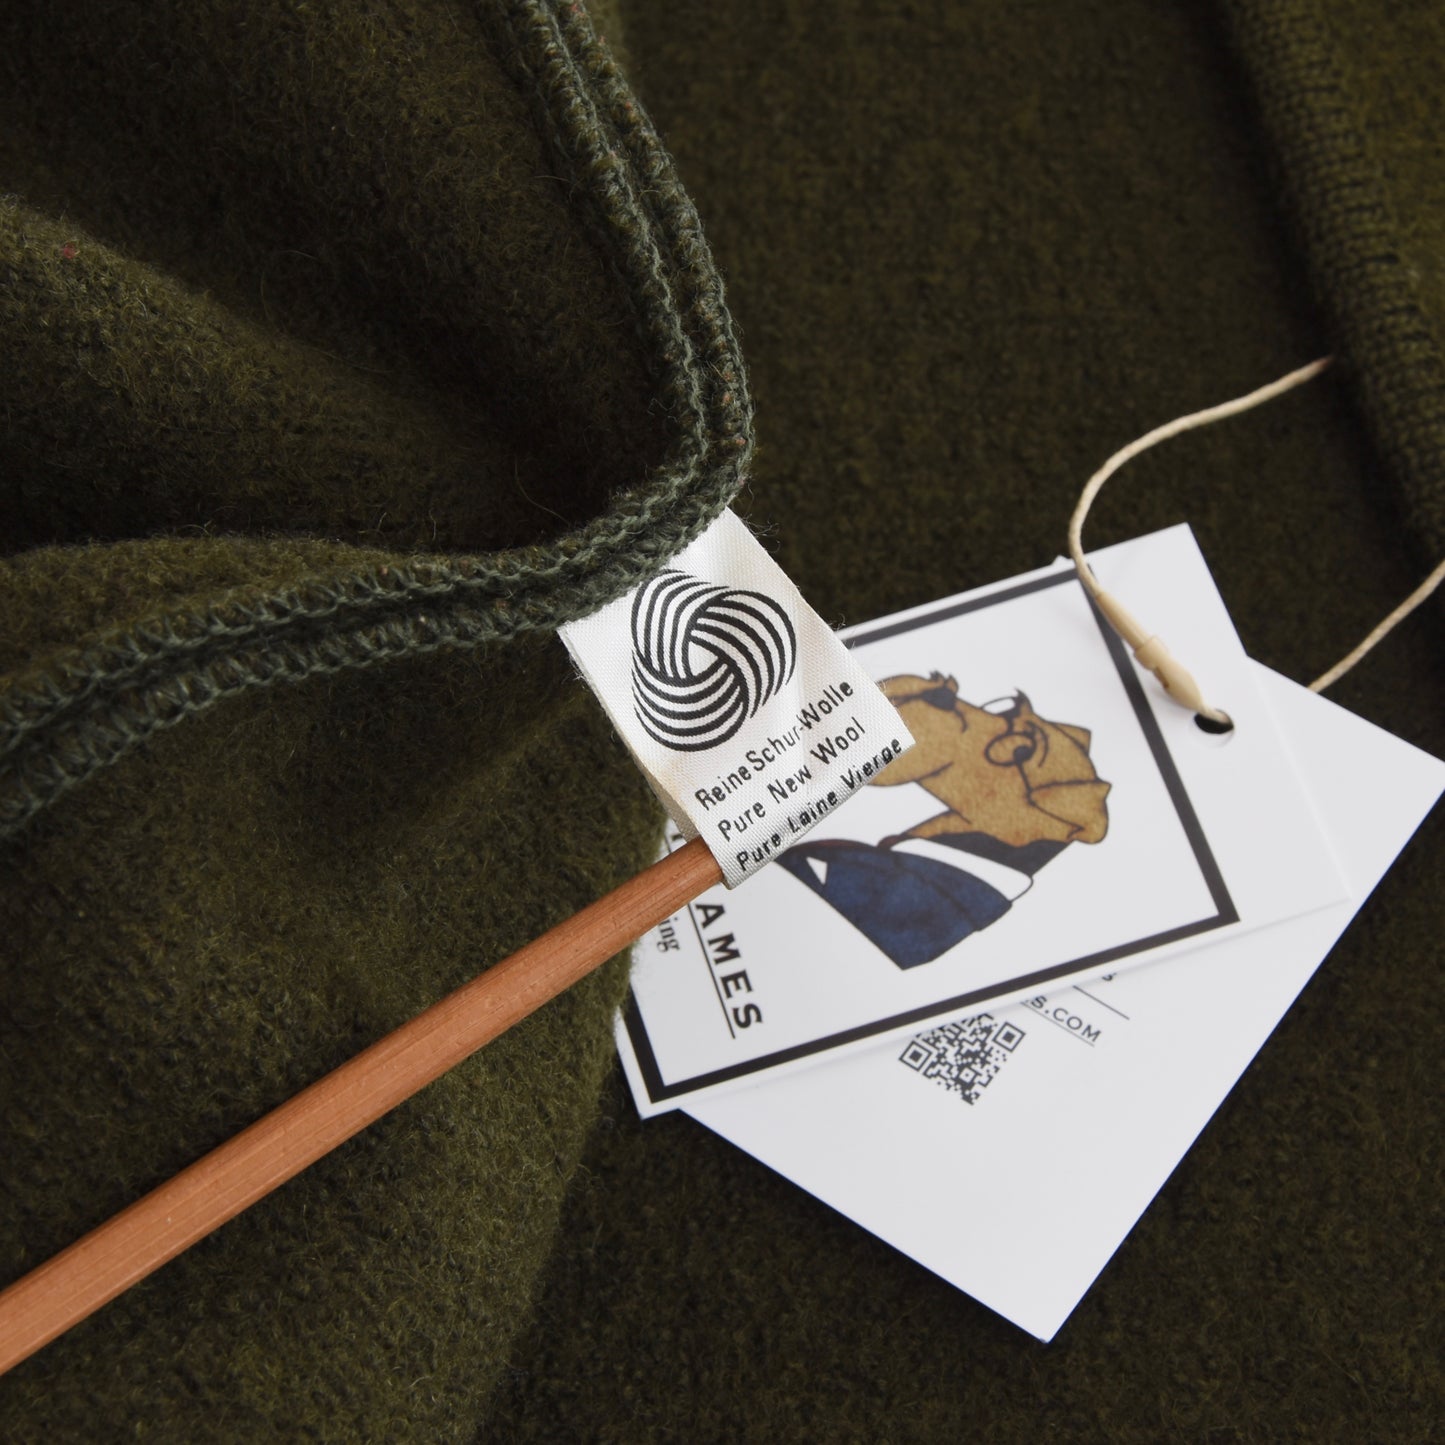 Geiger Tyrol Boiled Wool Cardigan/Jacket - Green